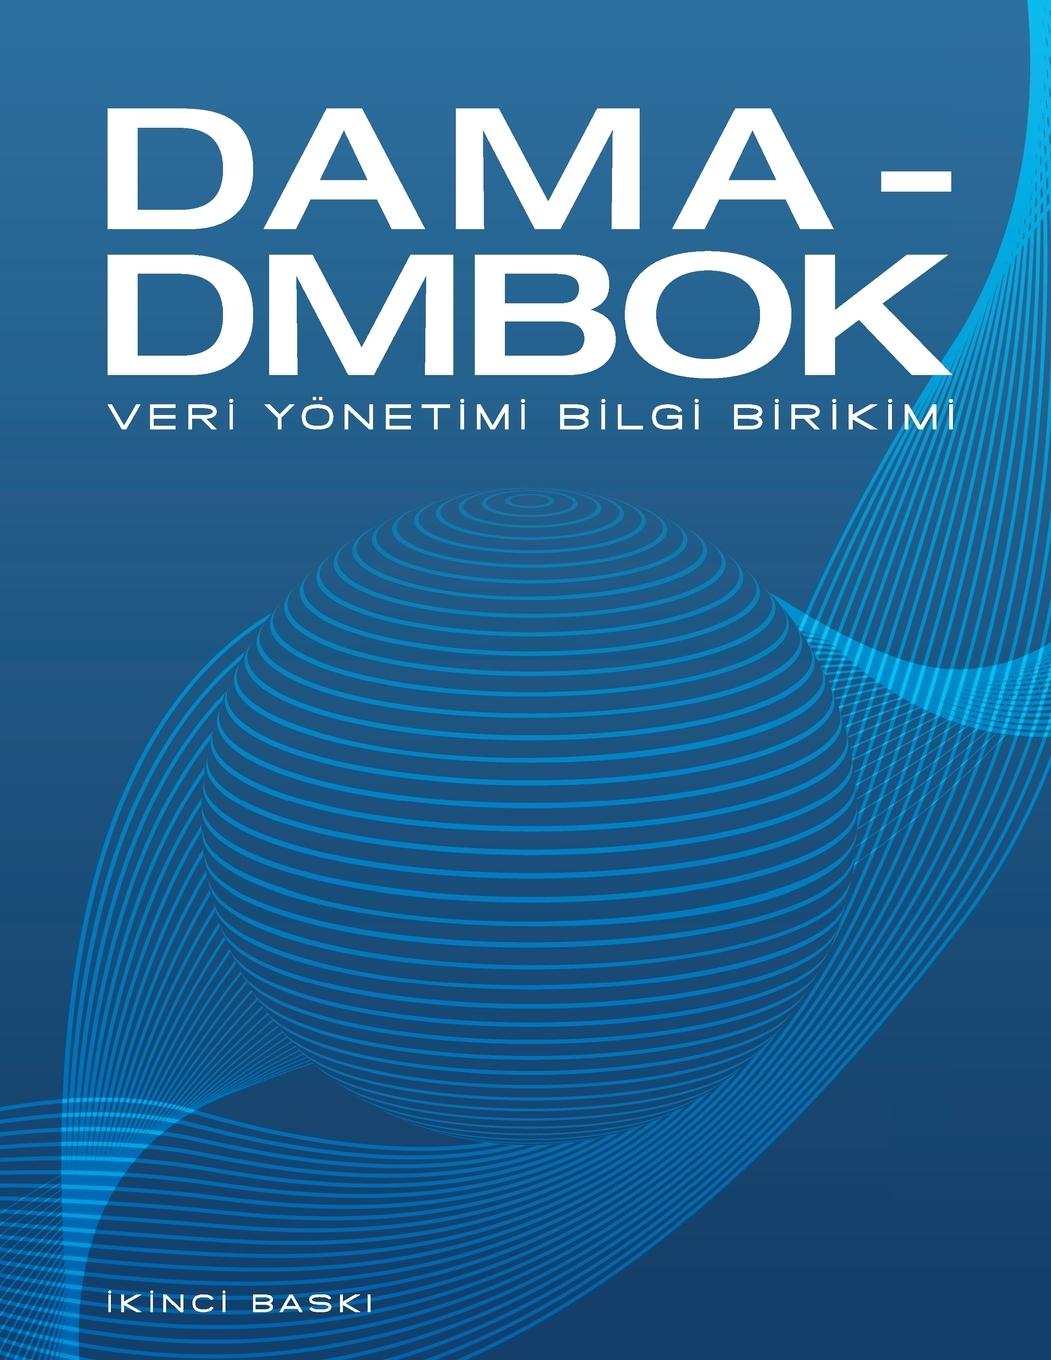 Kniha DAMA-DMBOK Turkish 